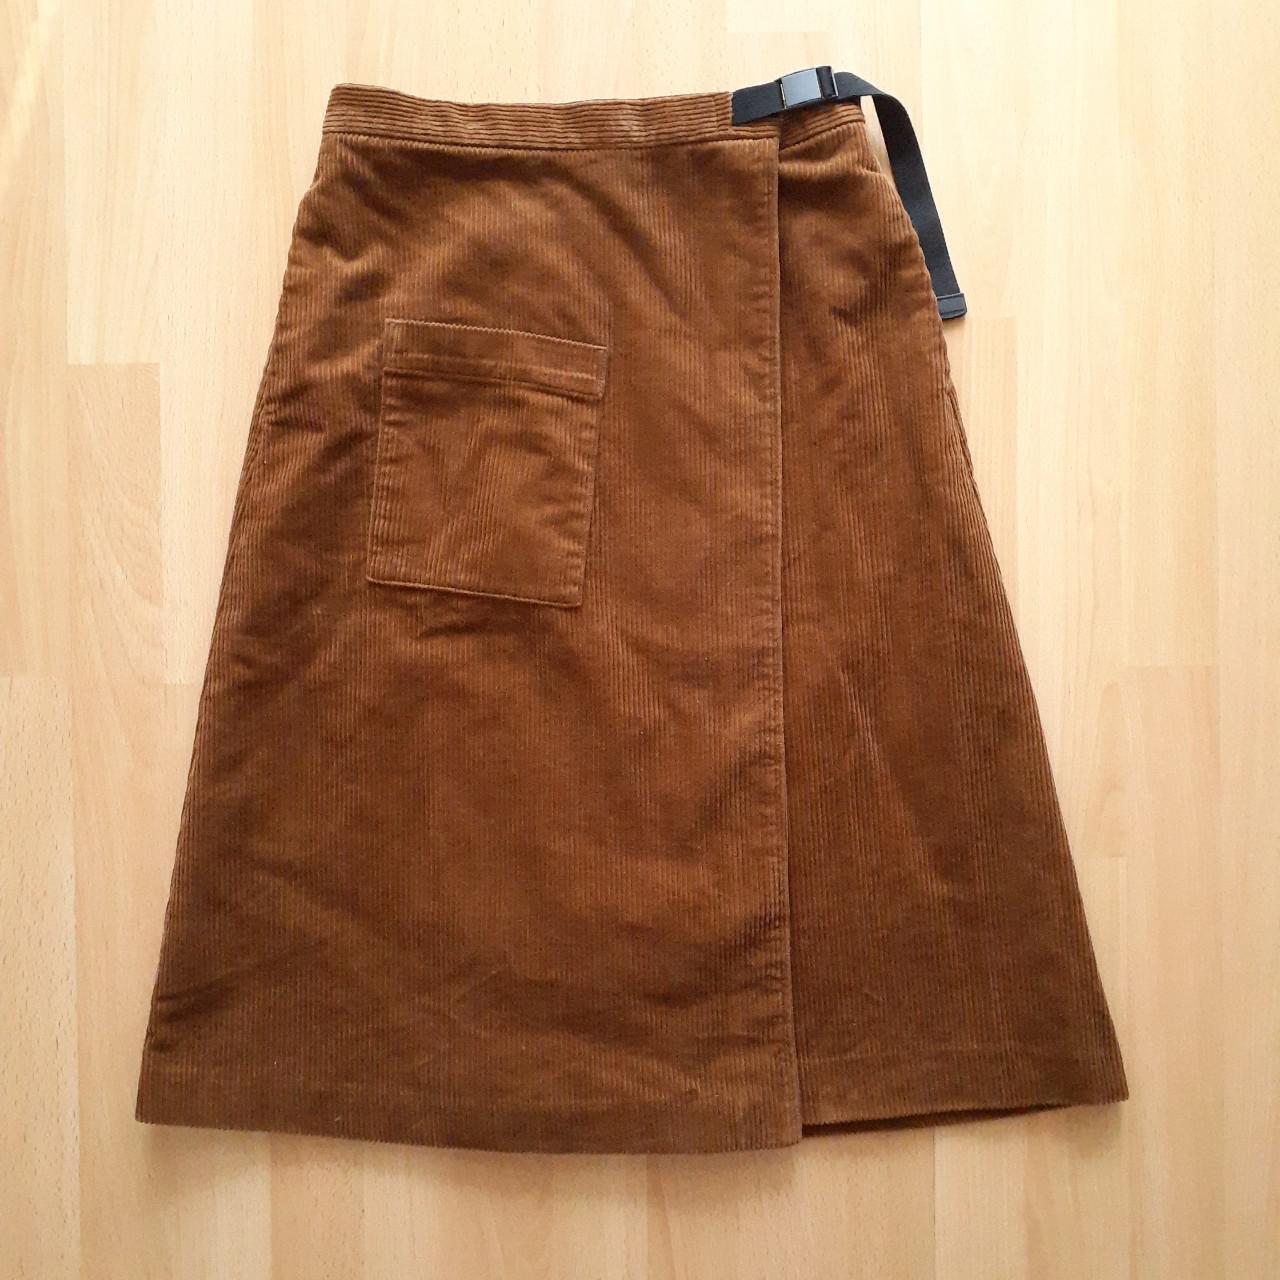 Product Image 1 - Vintage medium brown corduroy skirt